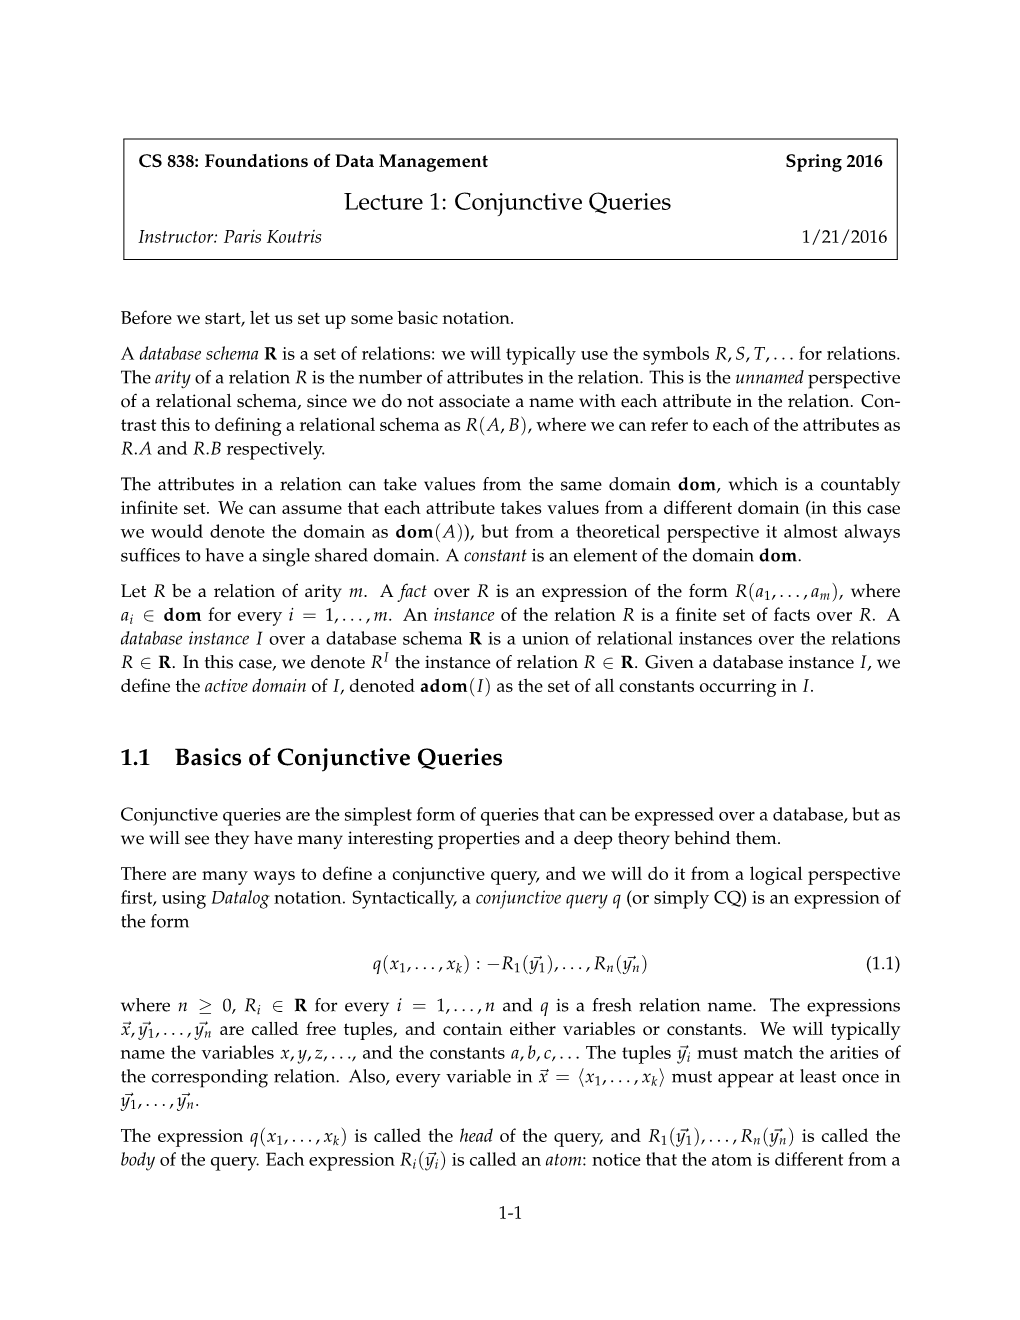 Lecture 1: Conjunctive Queries 1.1 Basics of Conjunctive Queries